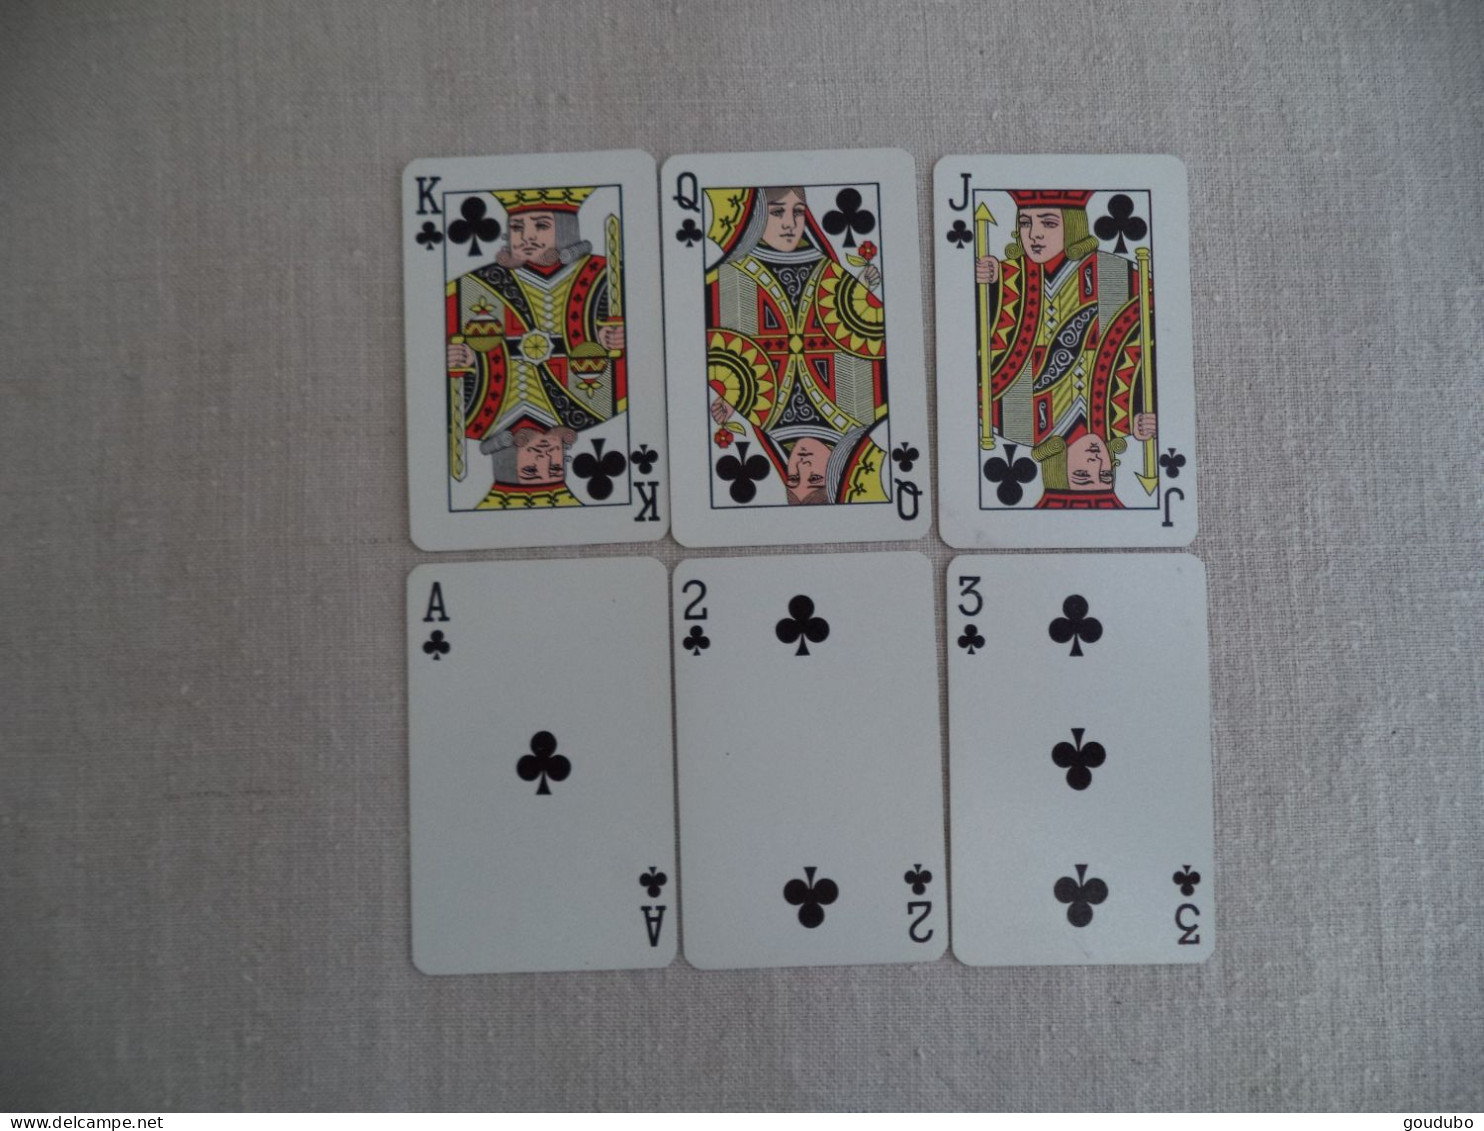 Cartes à jouer Poker Coffret deux jeux KEM Plastic Playing Cards  juin 1980 Made in USA.